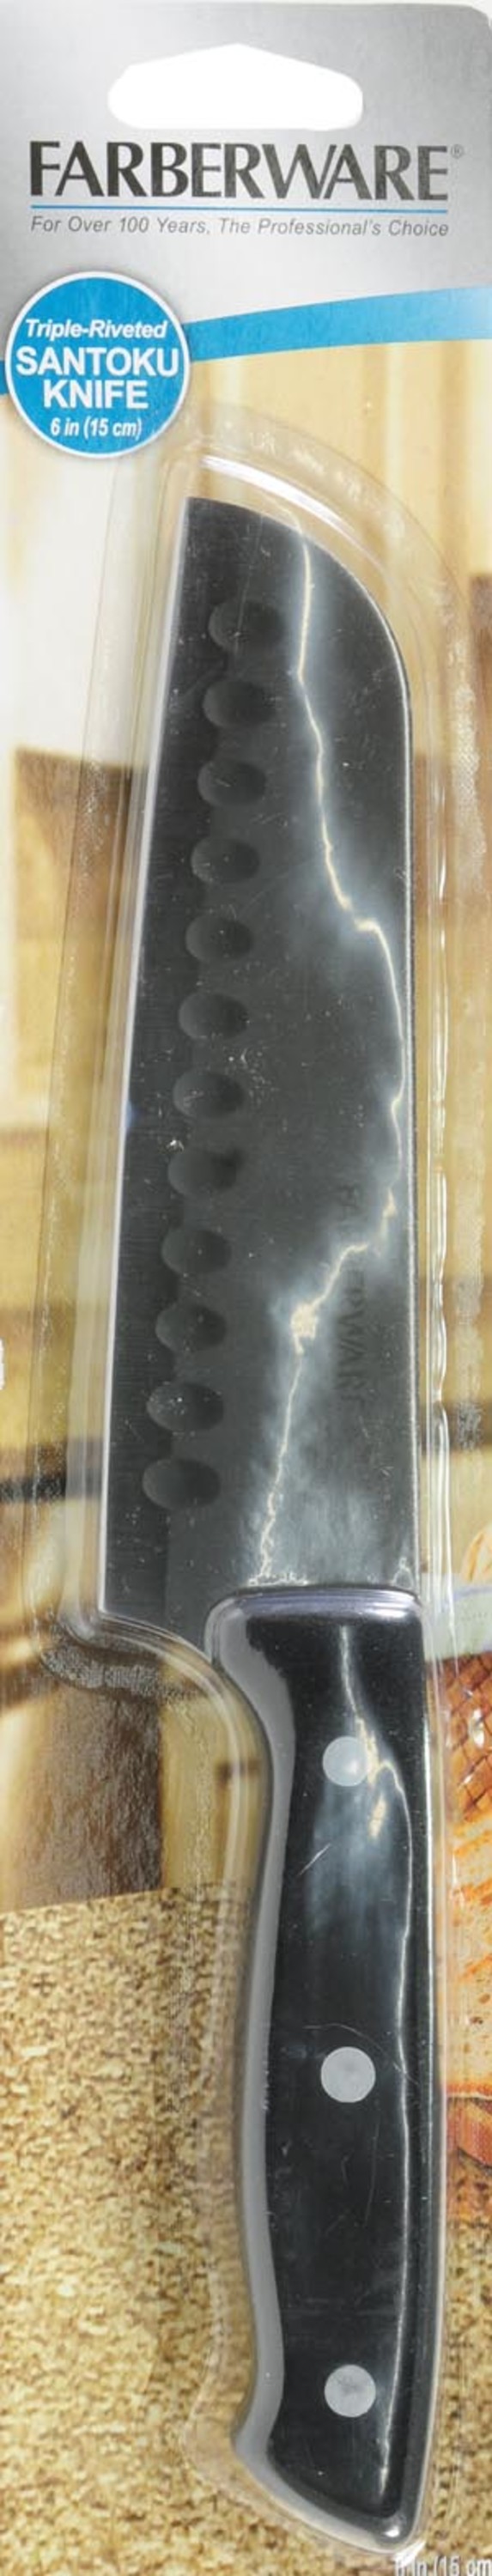 Farberware Classic -inch Full Tang Triple Riveted Santoku Knife with Black Handle - image 3 of 9